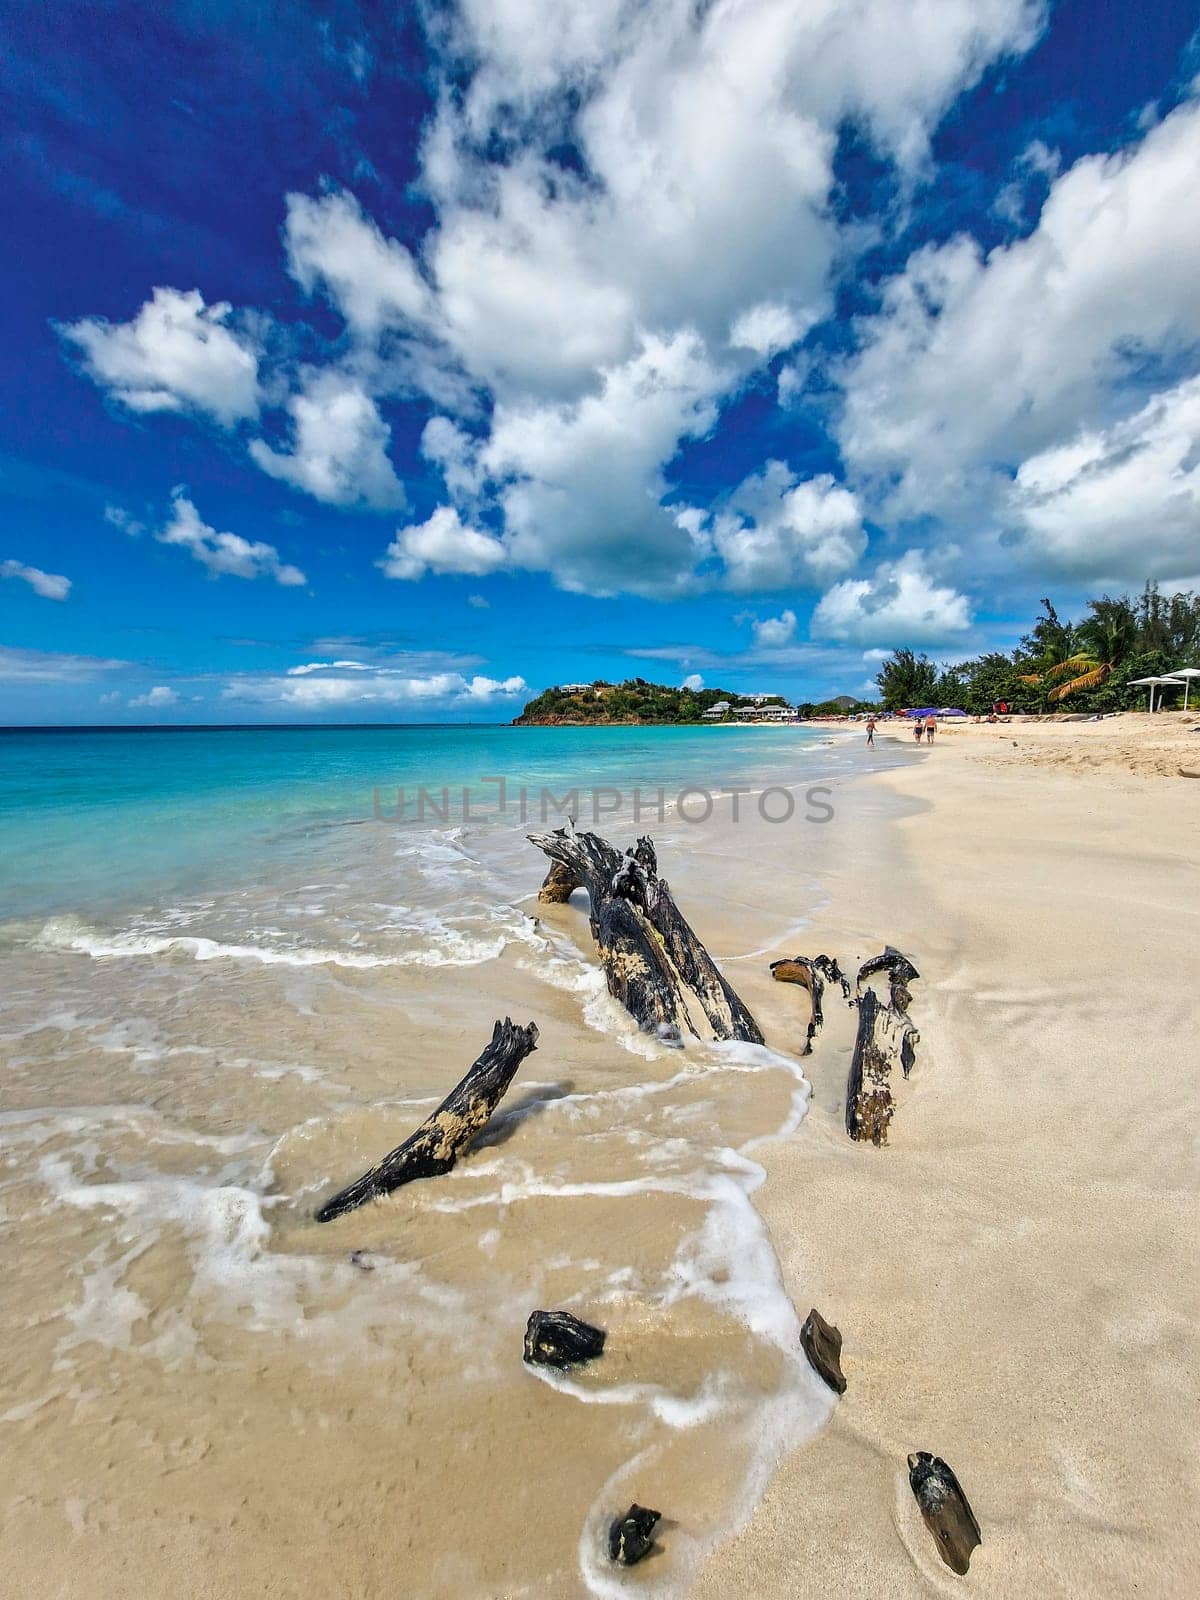 Caribbean shoreline featuring a tree trunk